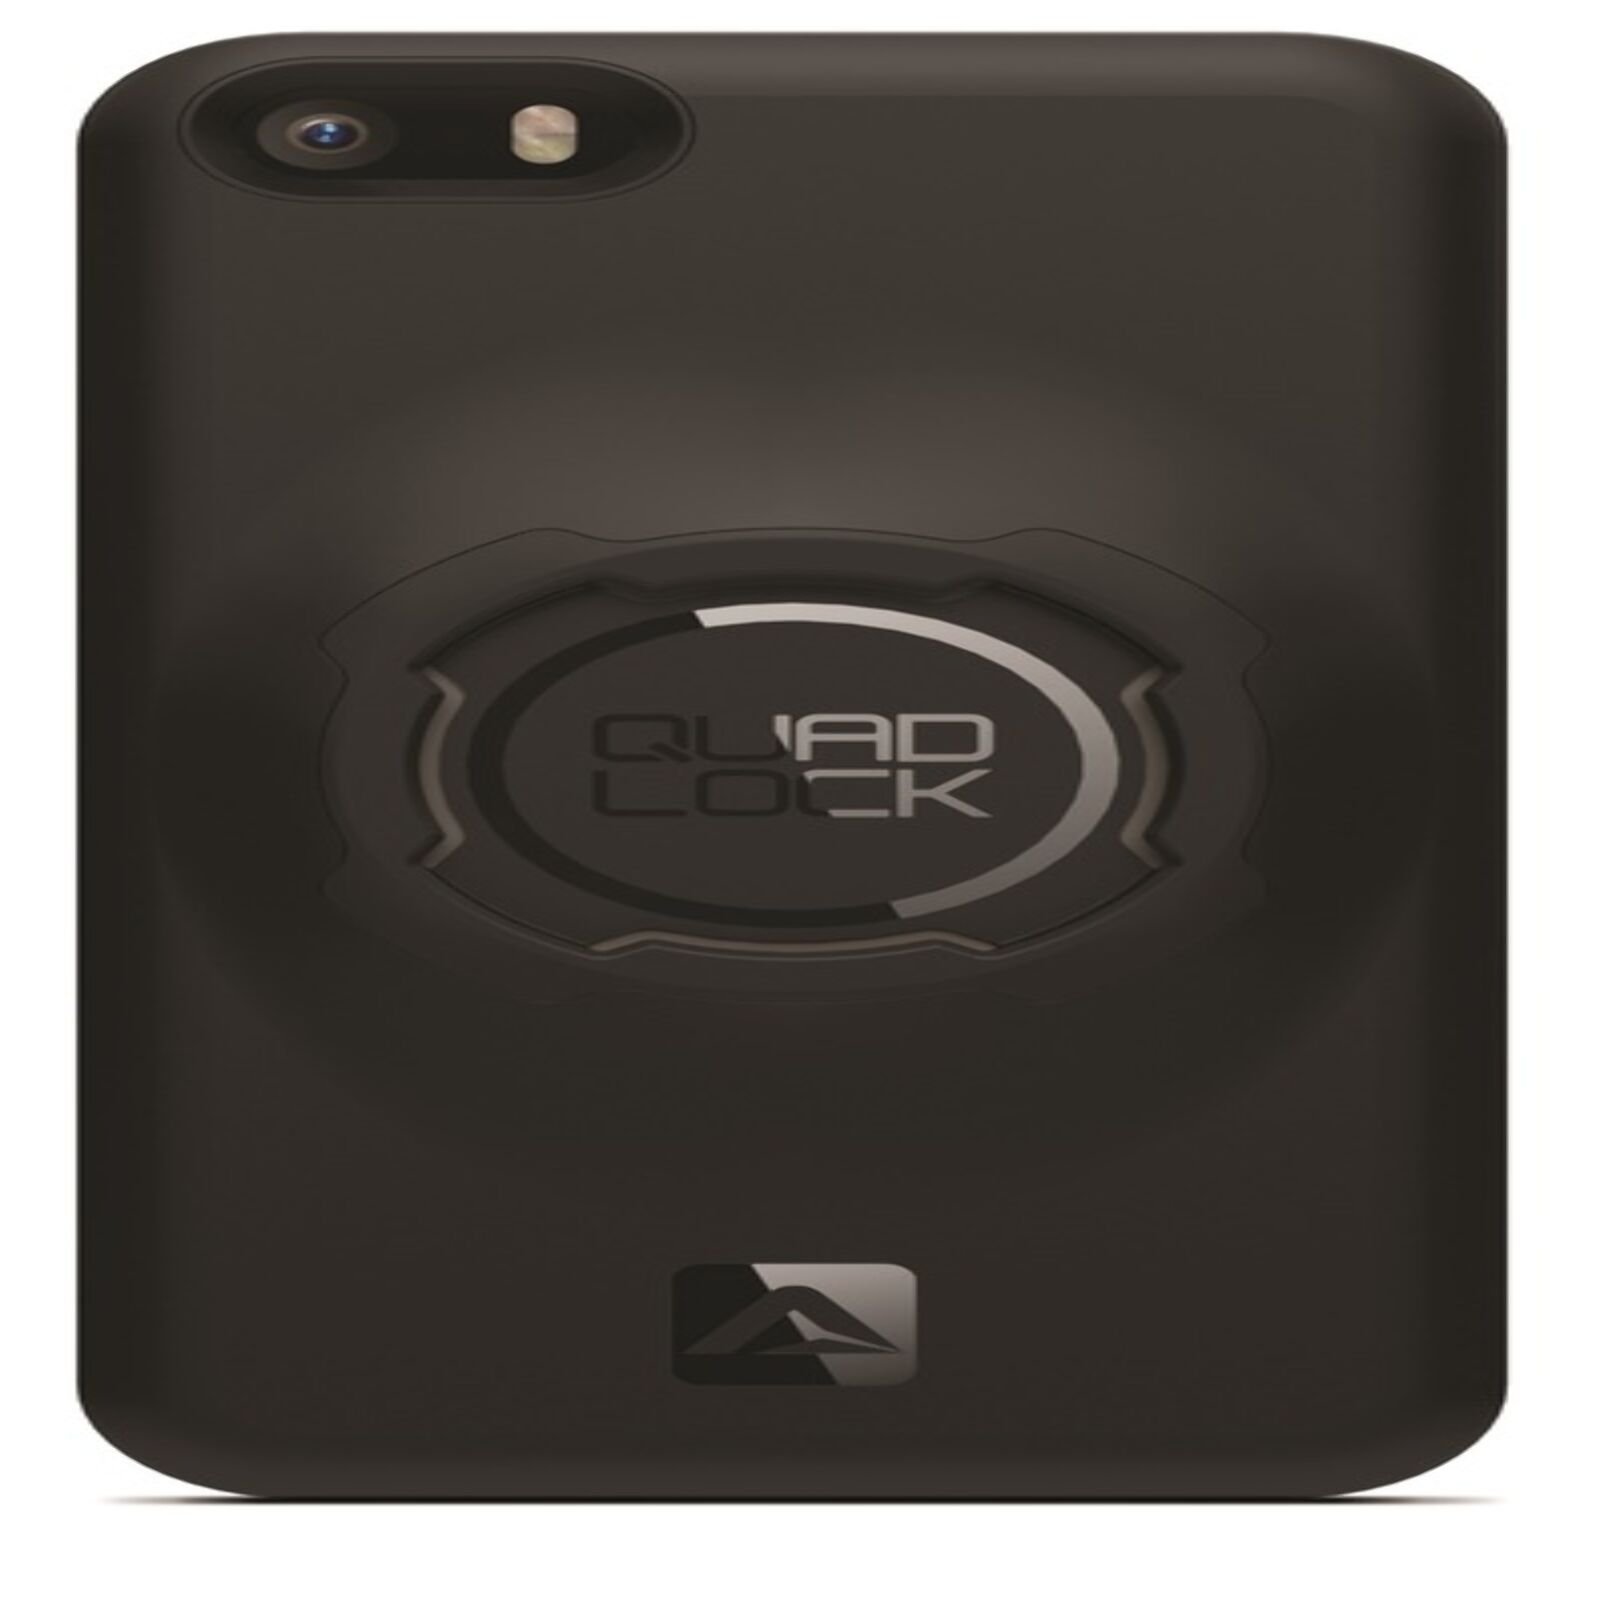 Obrázek produktu Pouzdro na telefon QUAD LOCK - iPhone 5/5S/SE (1. generace) QLC-IP5-B